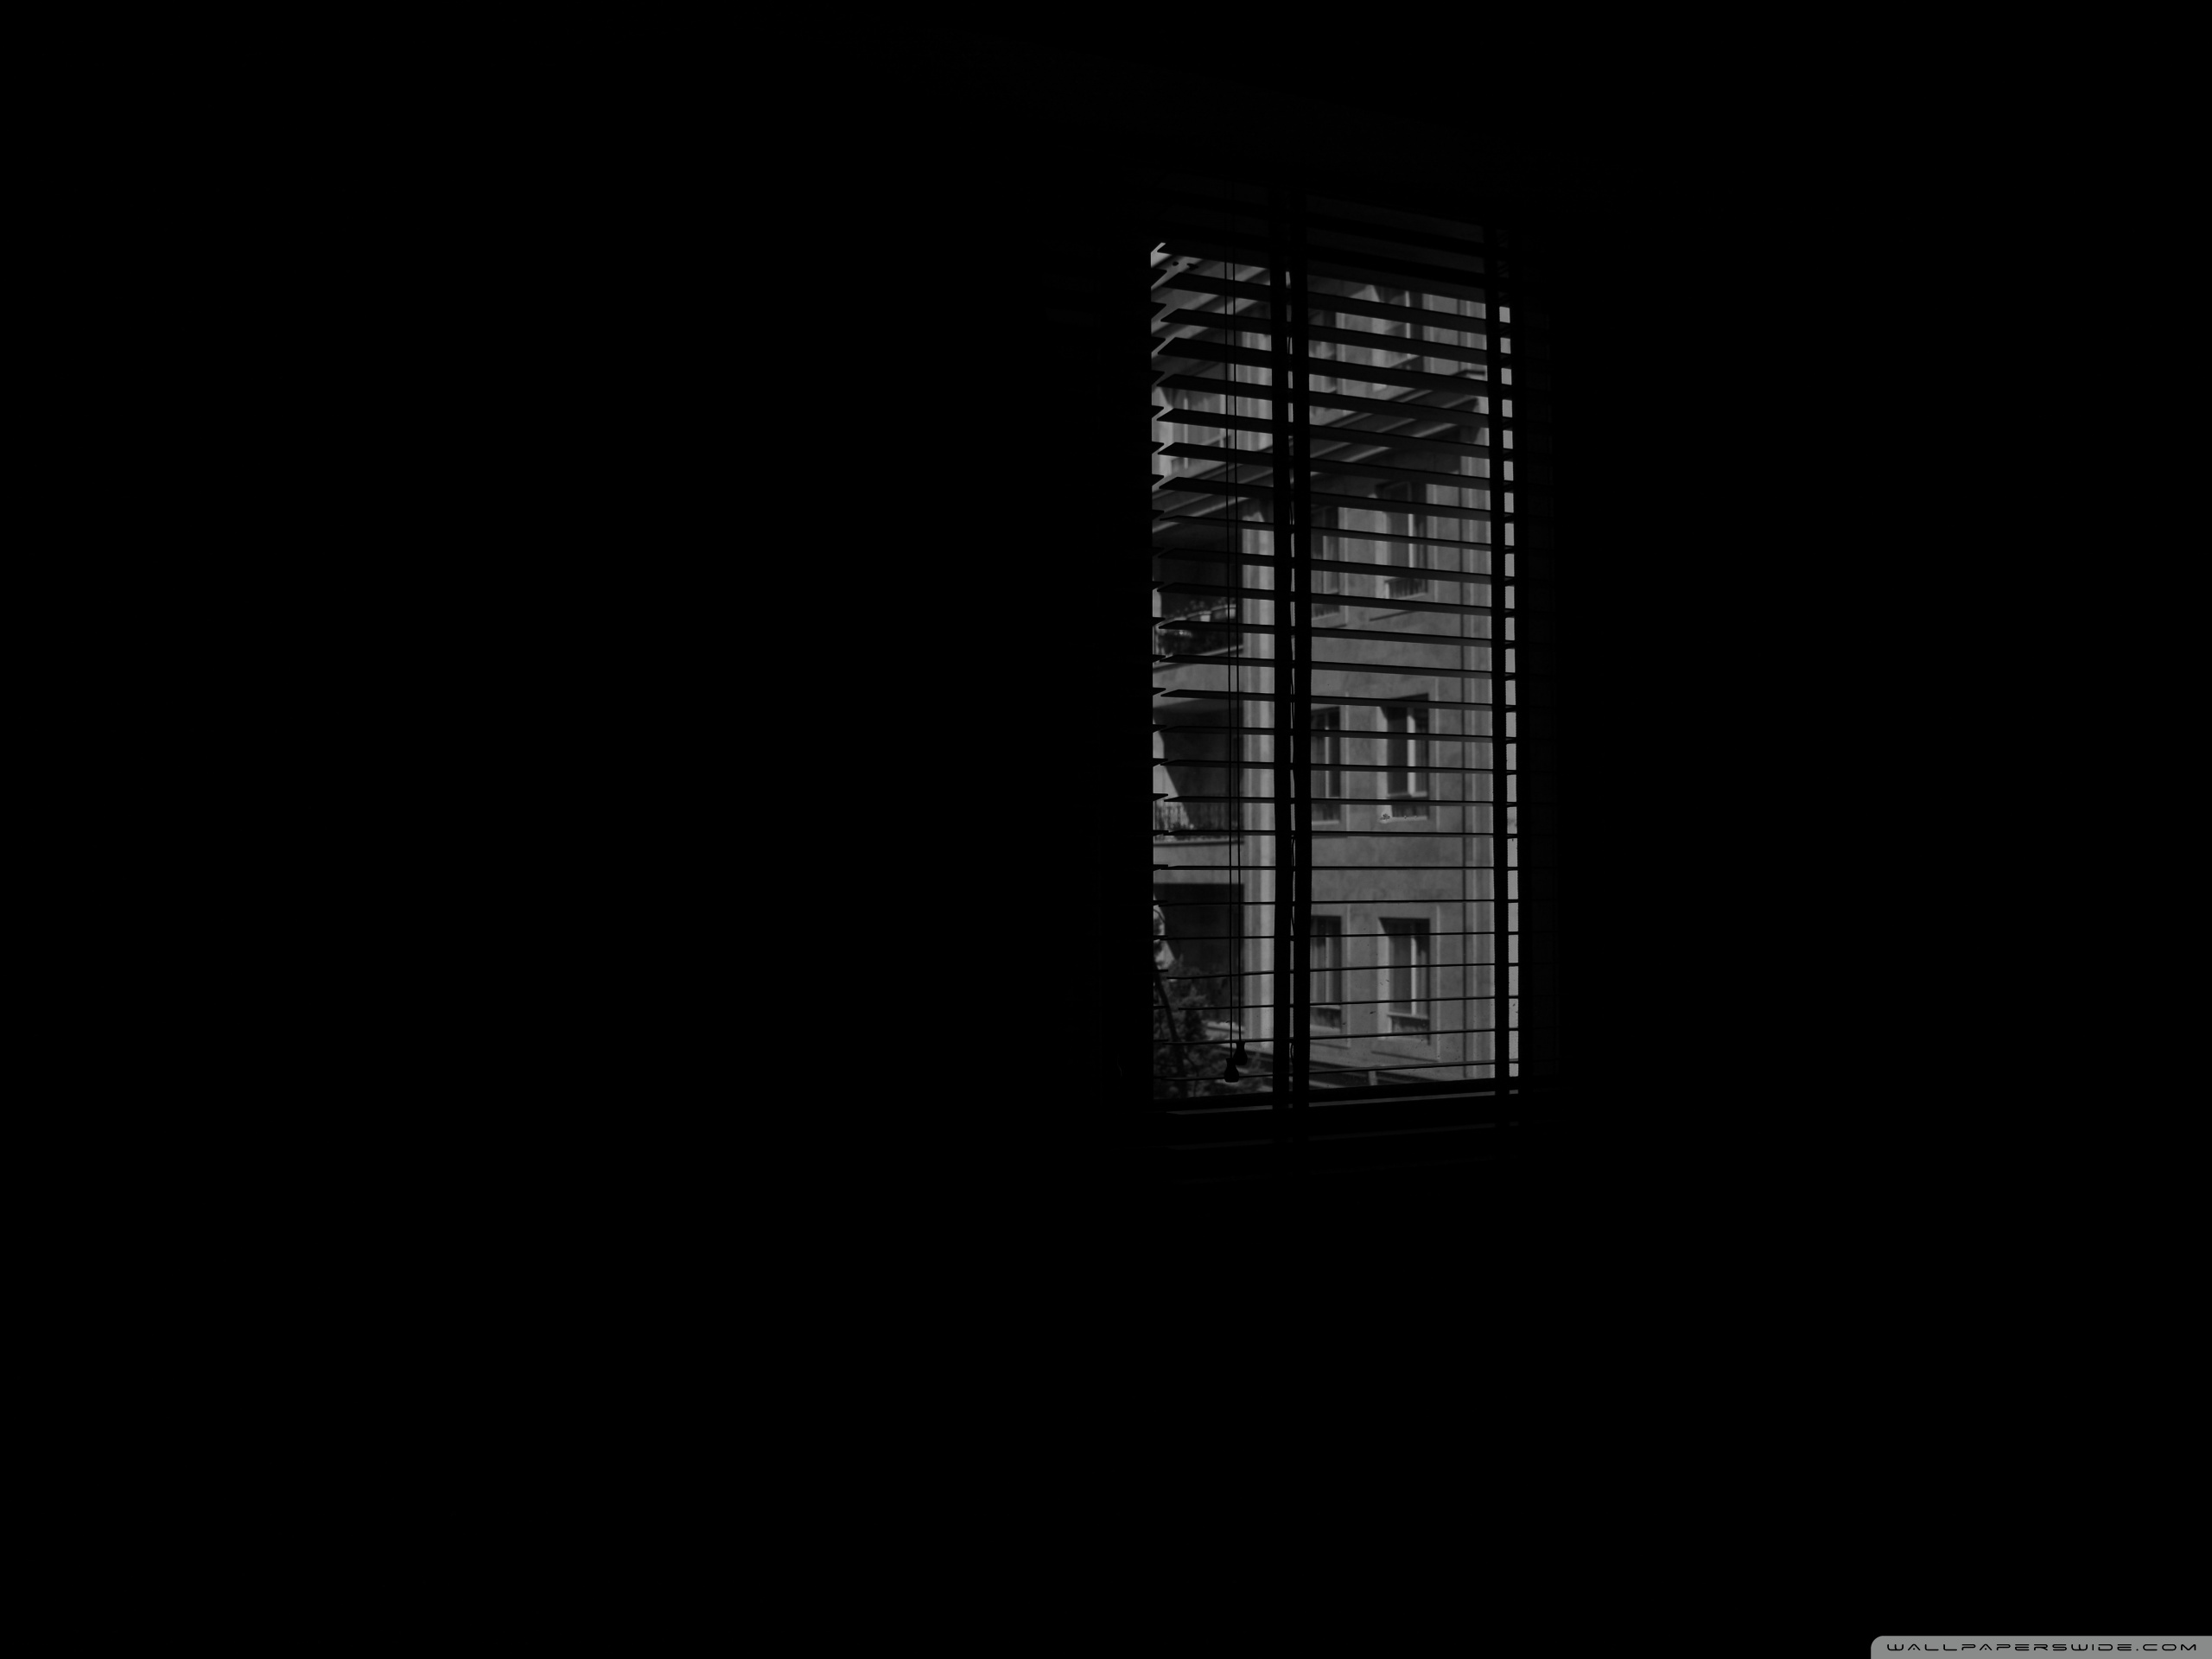 3840x2160] Windows Wallpapers Dark Theme (2nd upload : Better